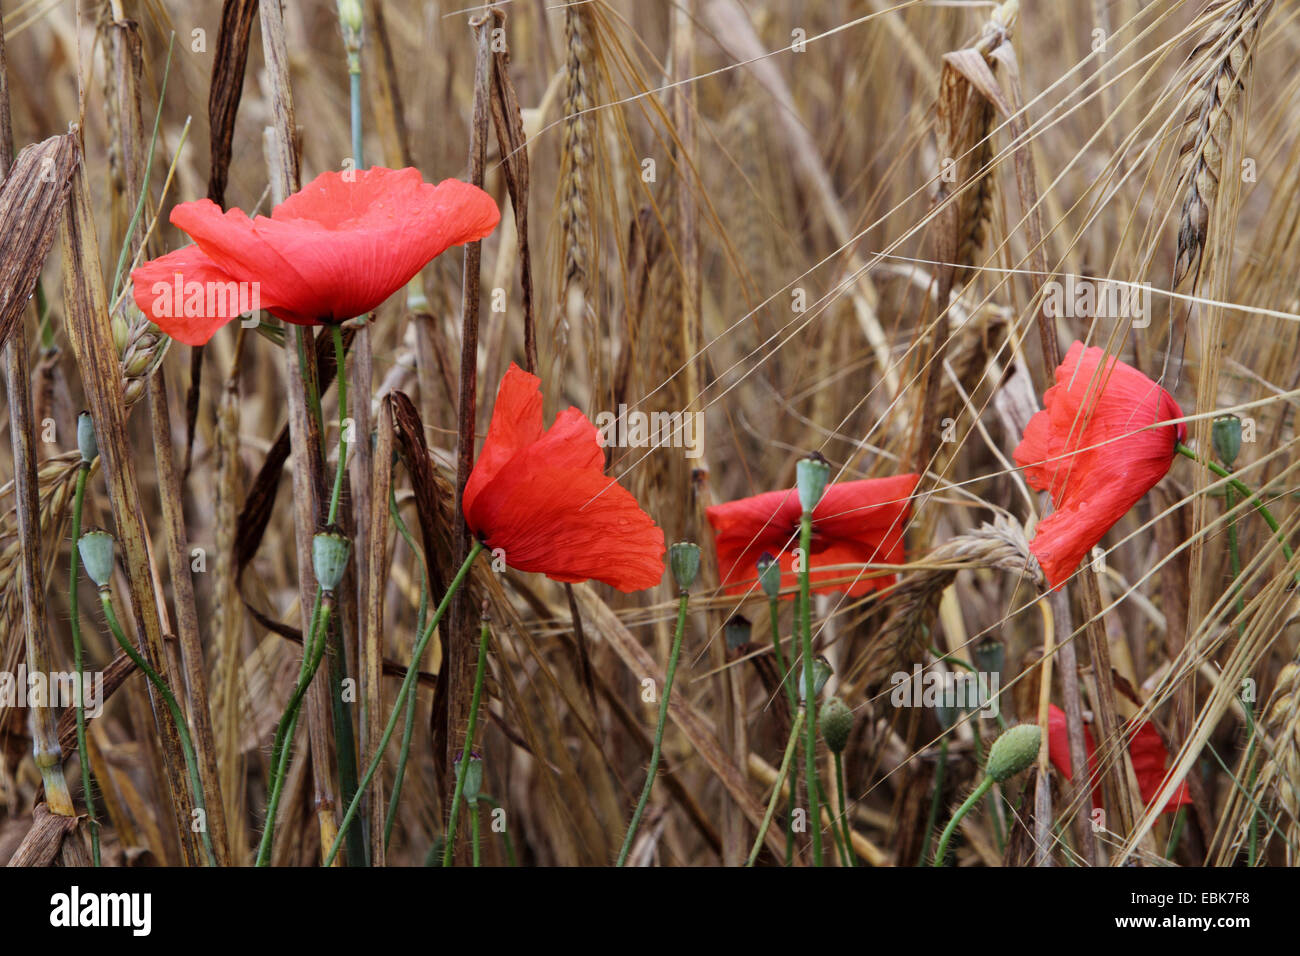 Common poppy, Corn poppy, Red poppy (Papaver rhoeas), in a barley field, Germany Stock Photo